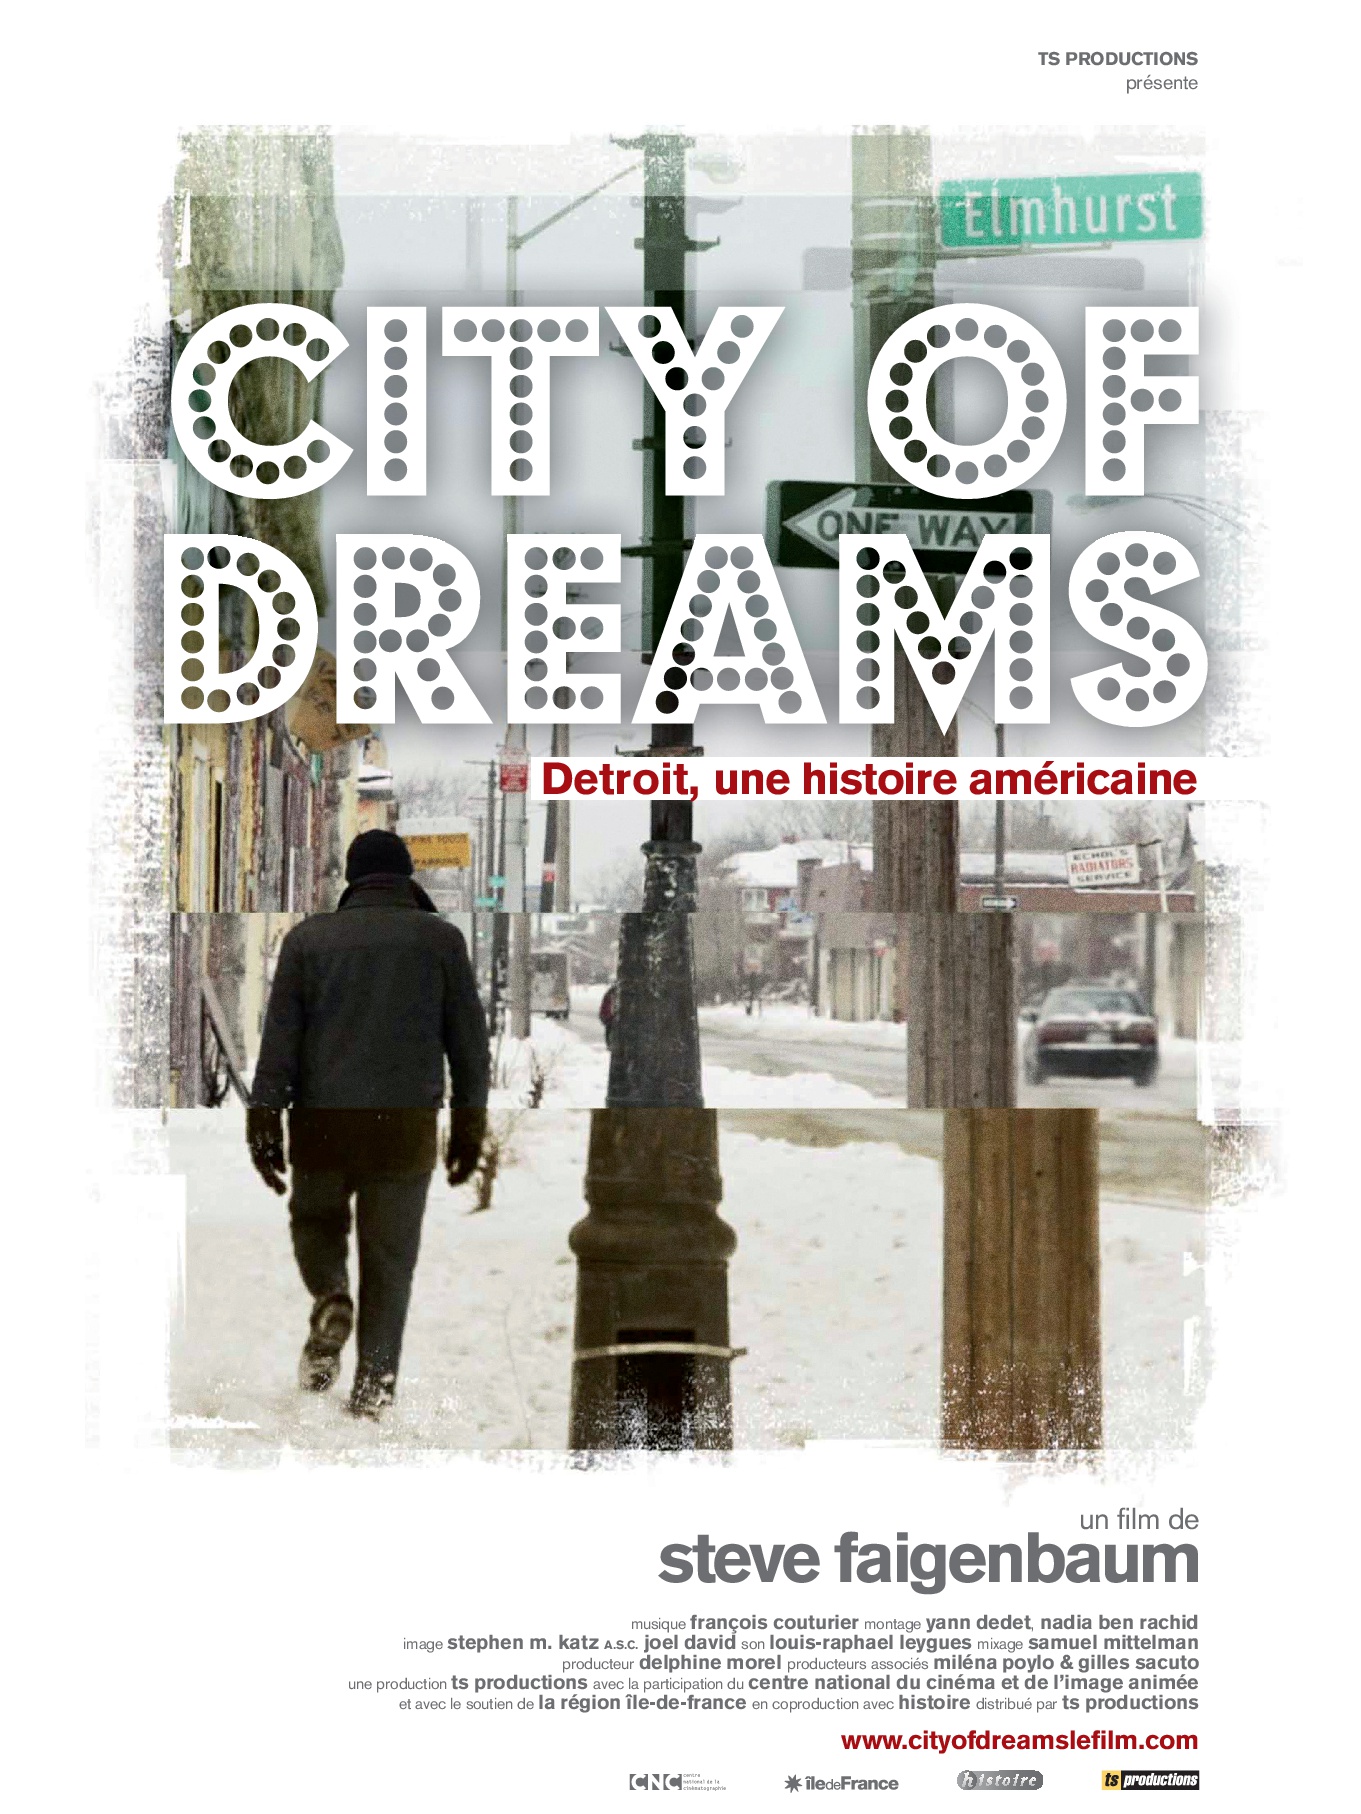 CITY OF DREAMS - Steve Faigenbaum